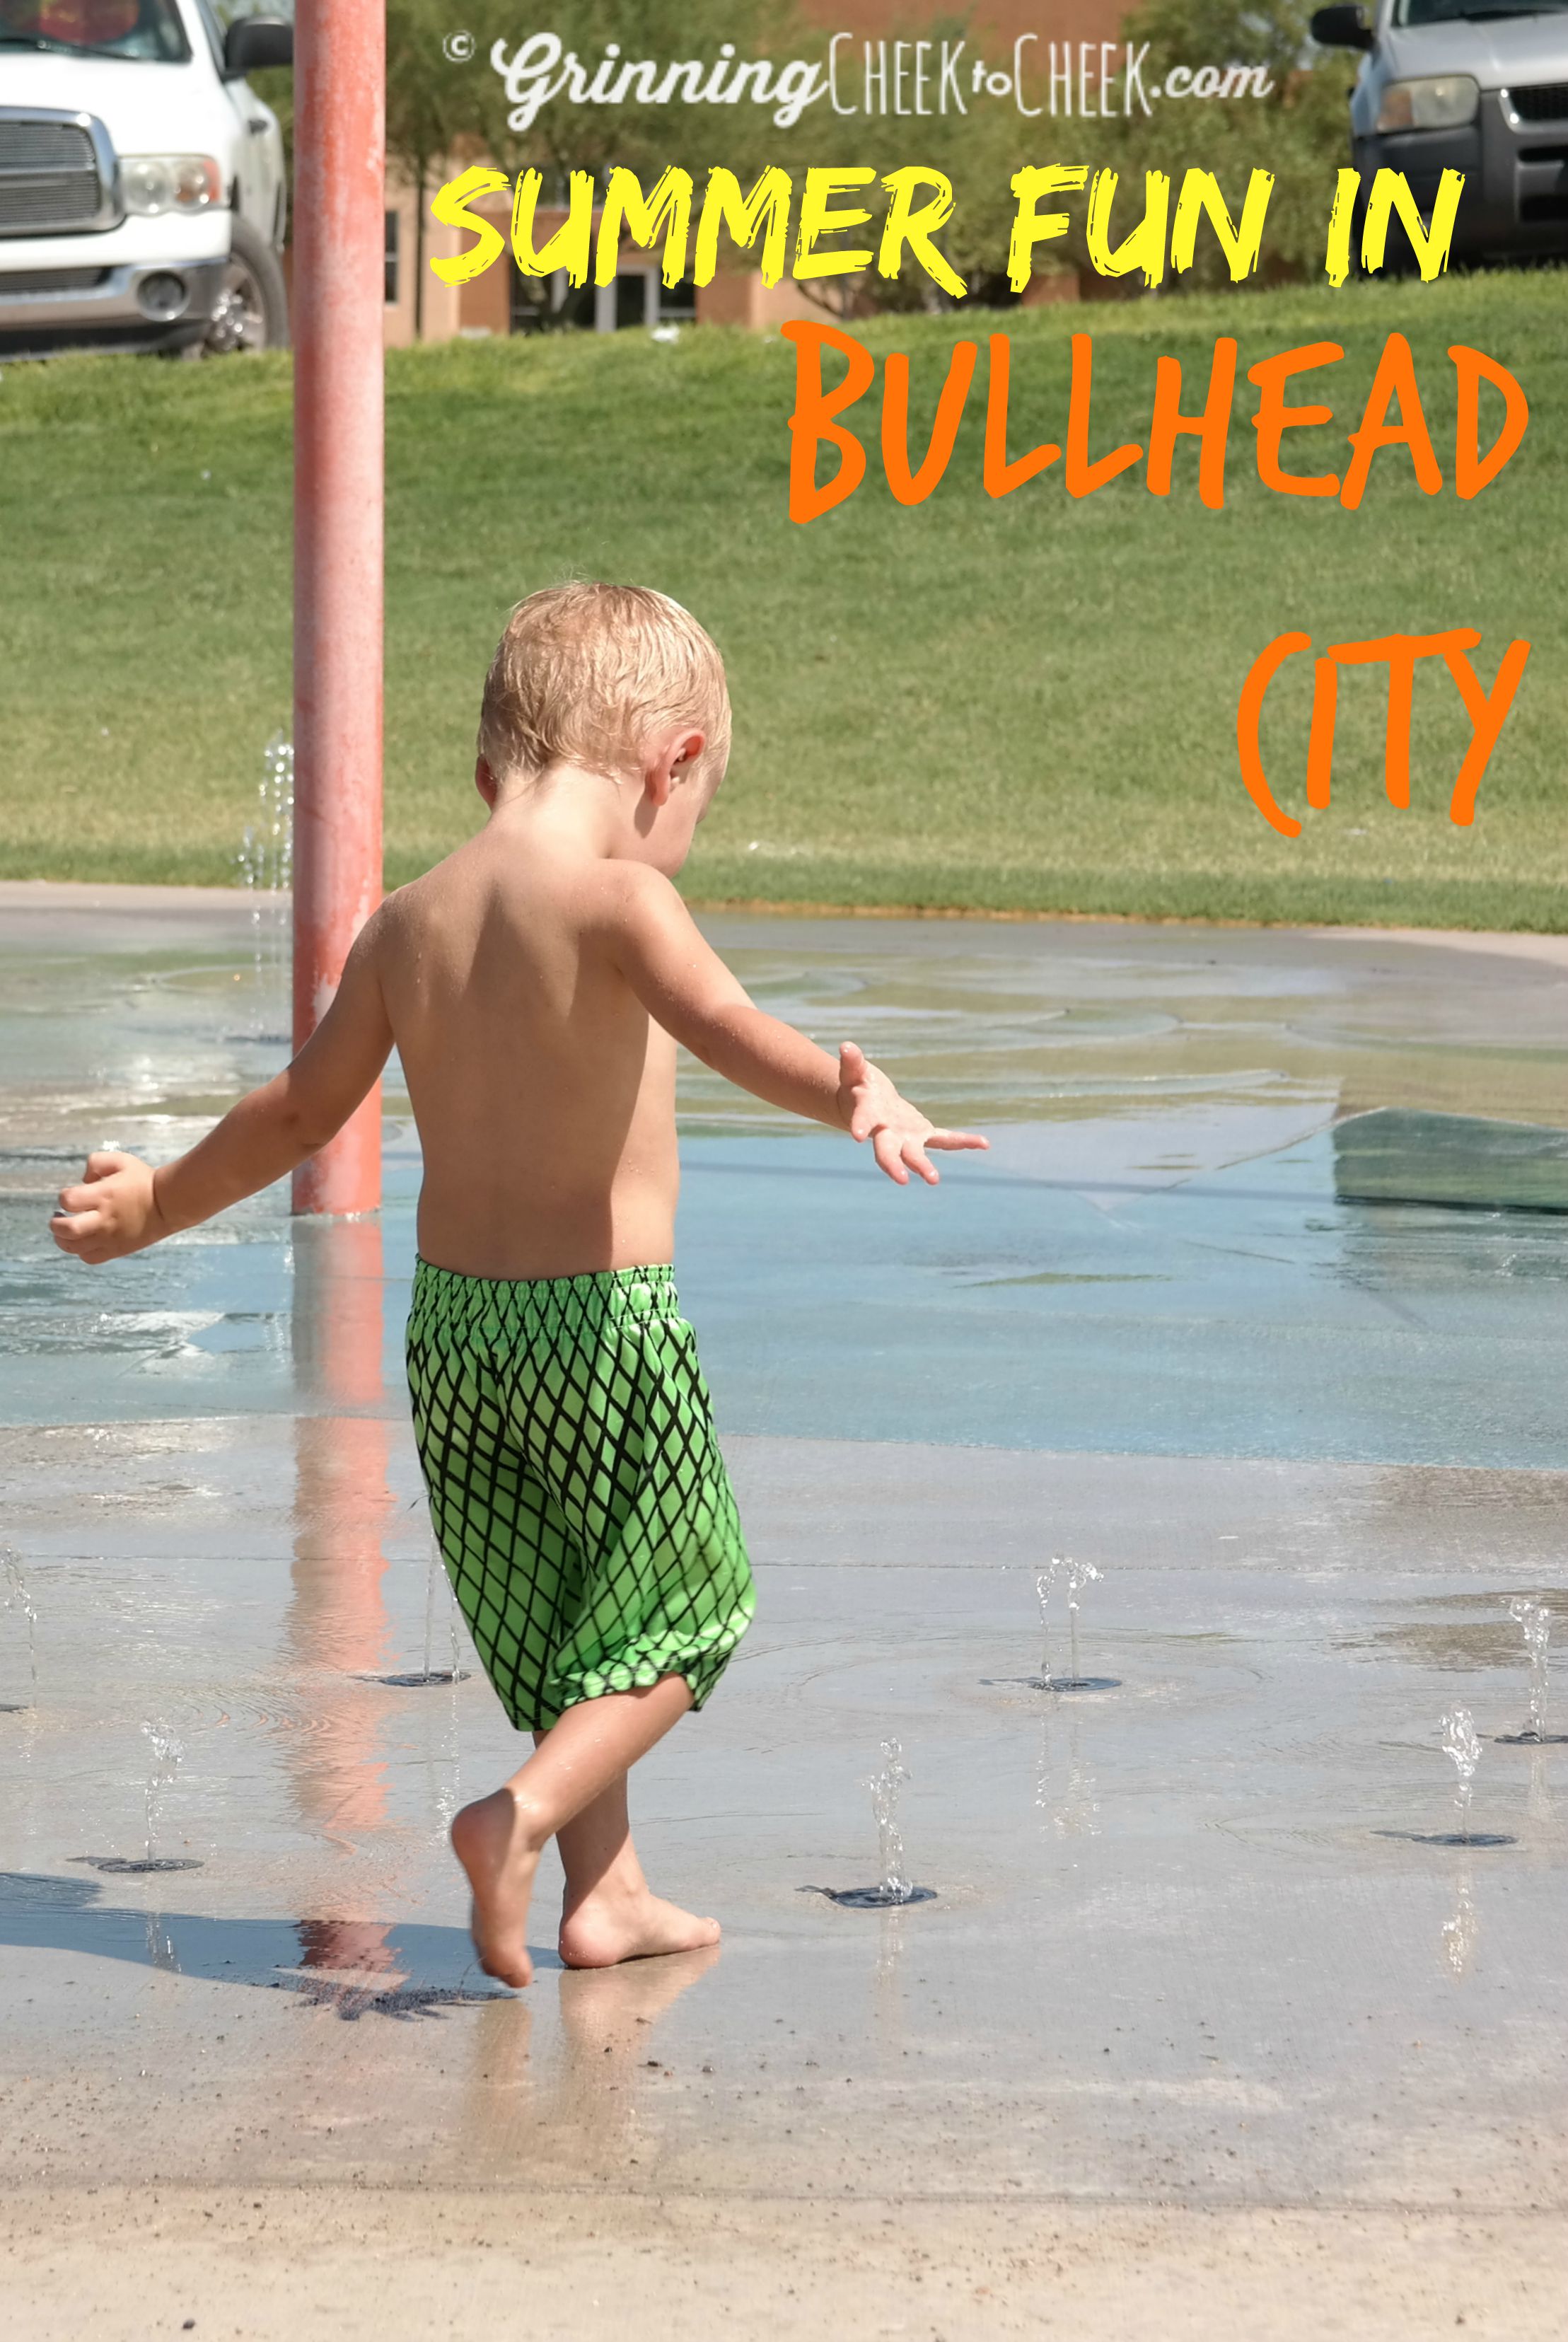 Summer fun in Bullhead City, Arizona